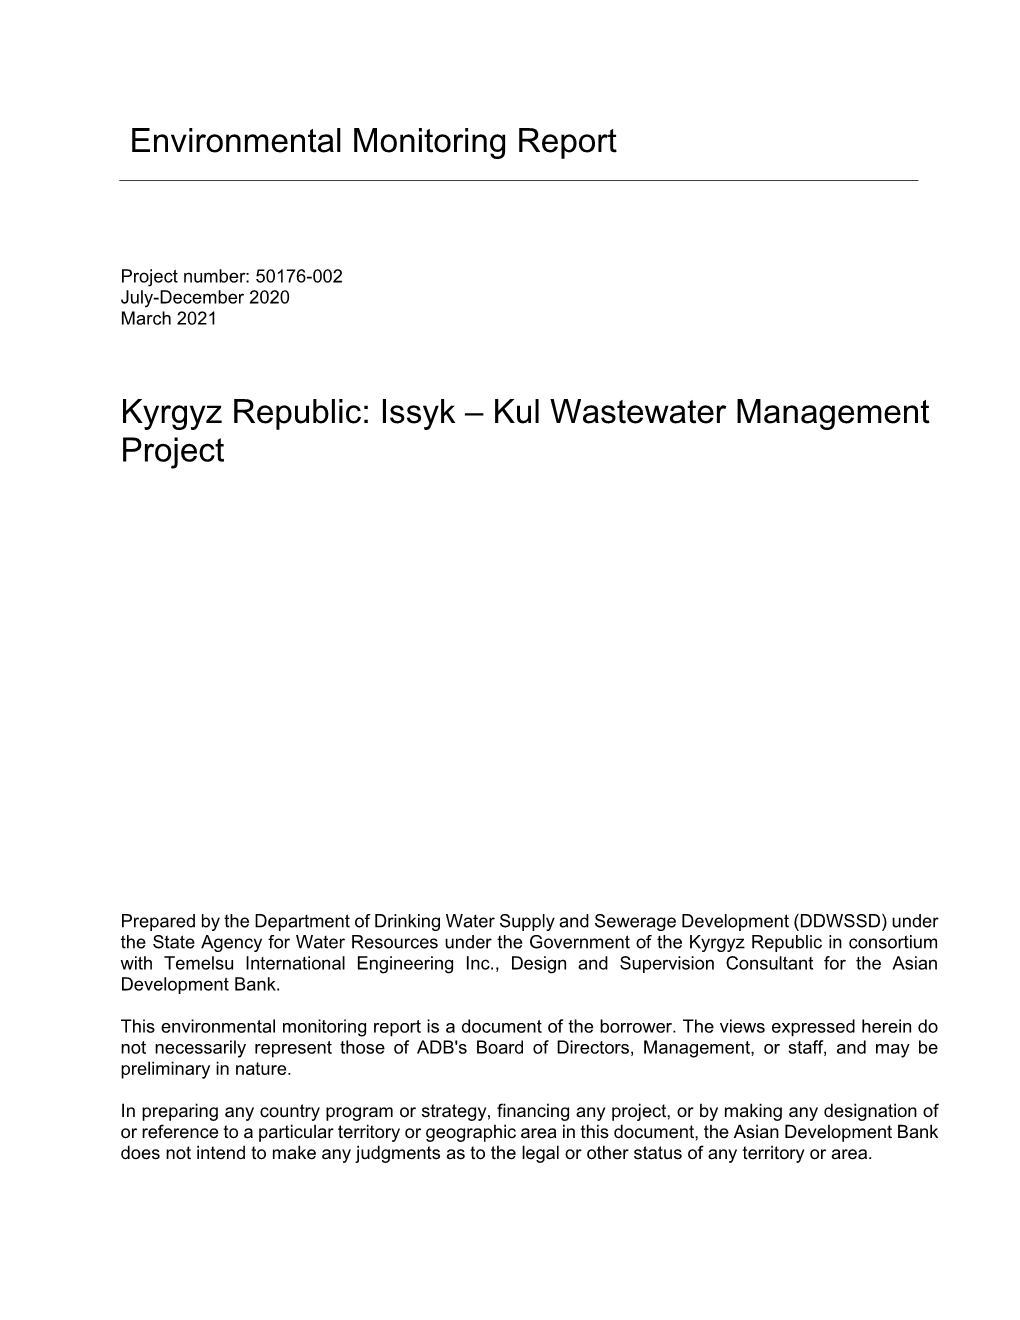 Kyrgyz Republic: Issyk – Kul Wastewater Management Project